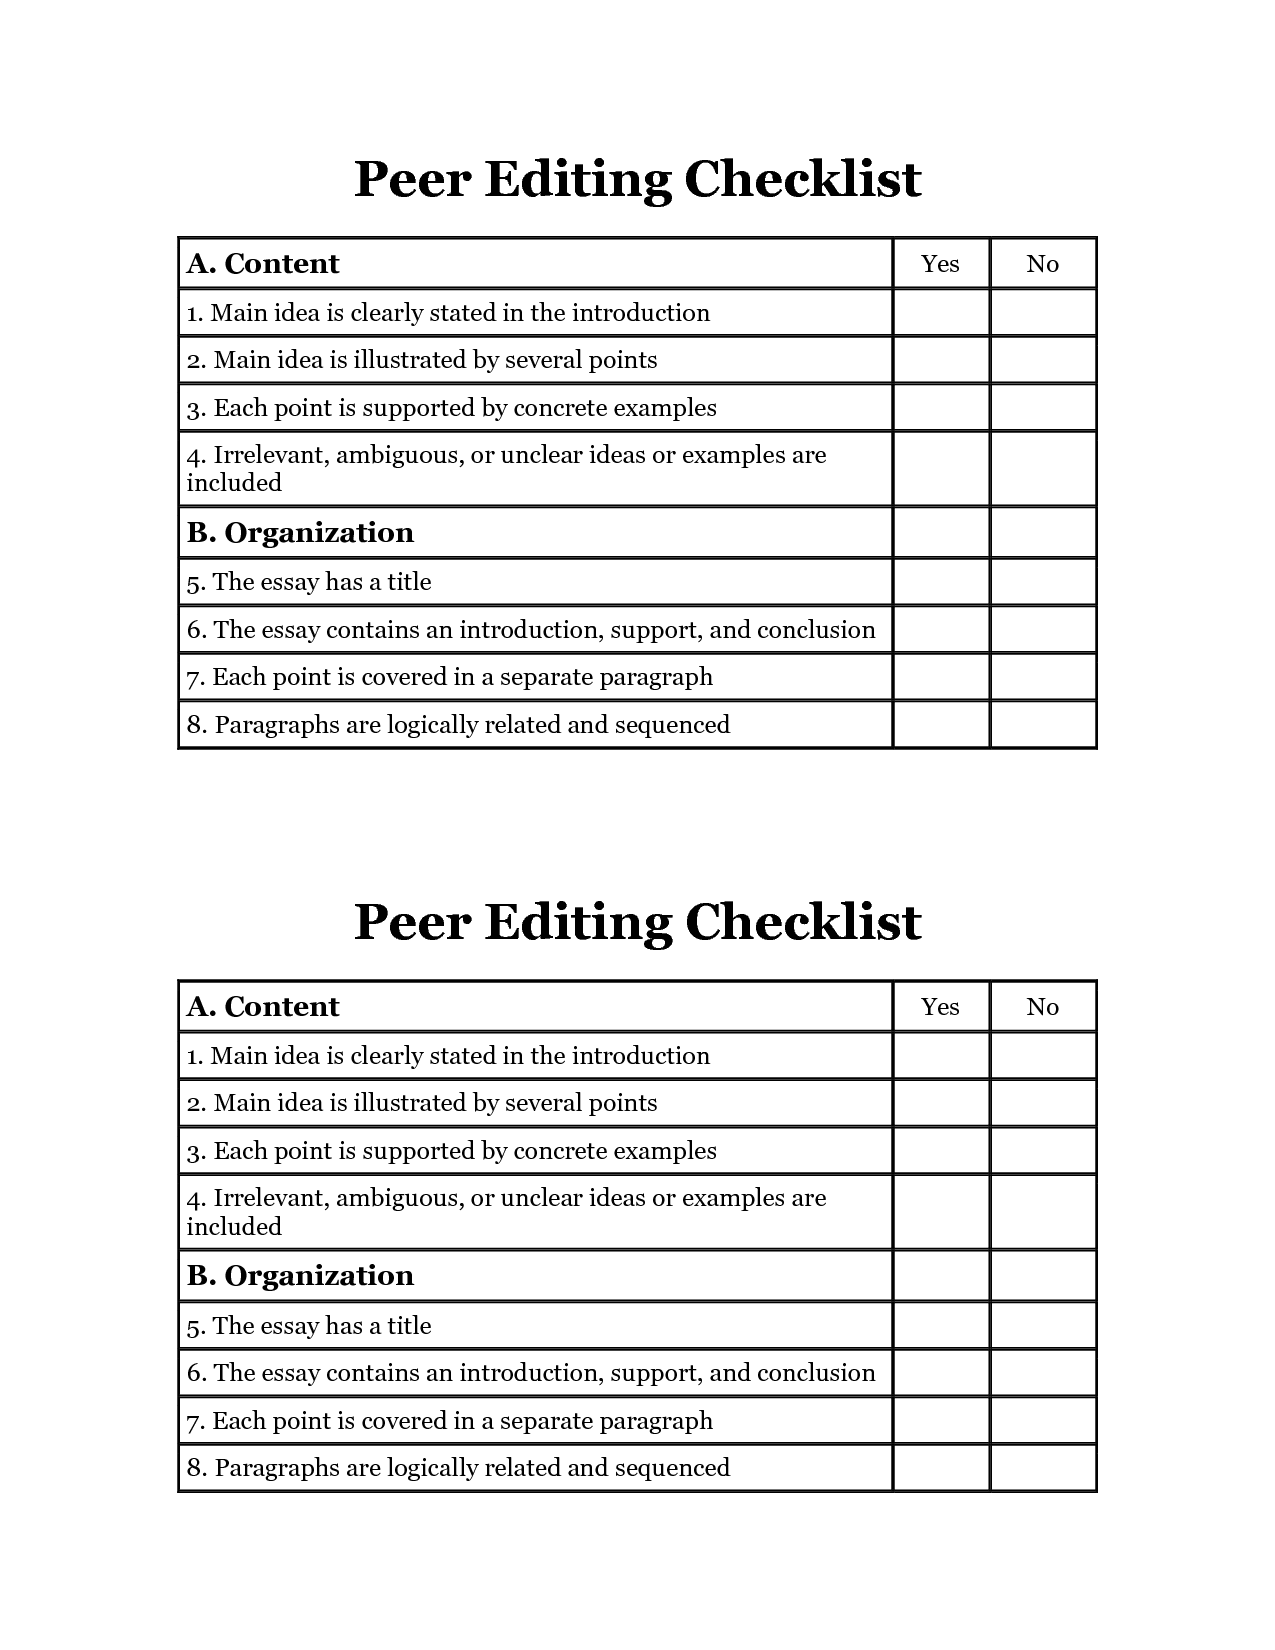 peer-editing-checklist-for-narrative-or-descriptive-essay